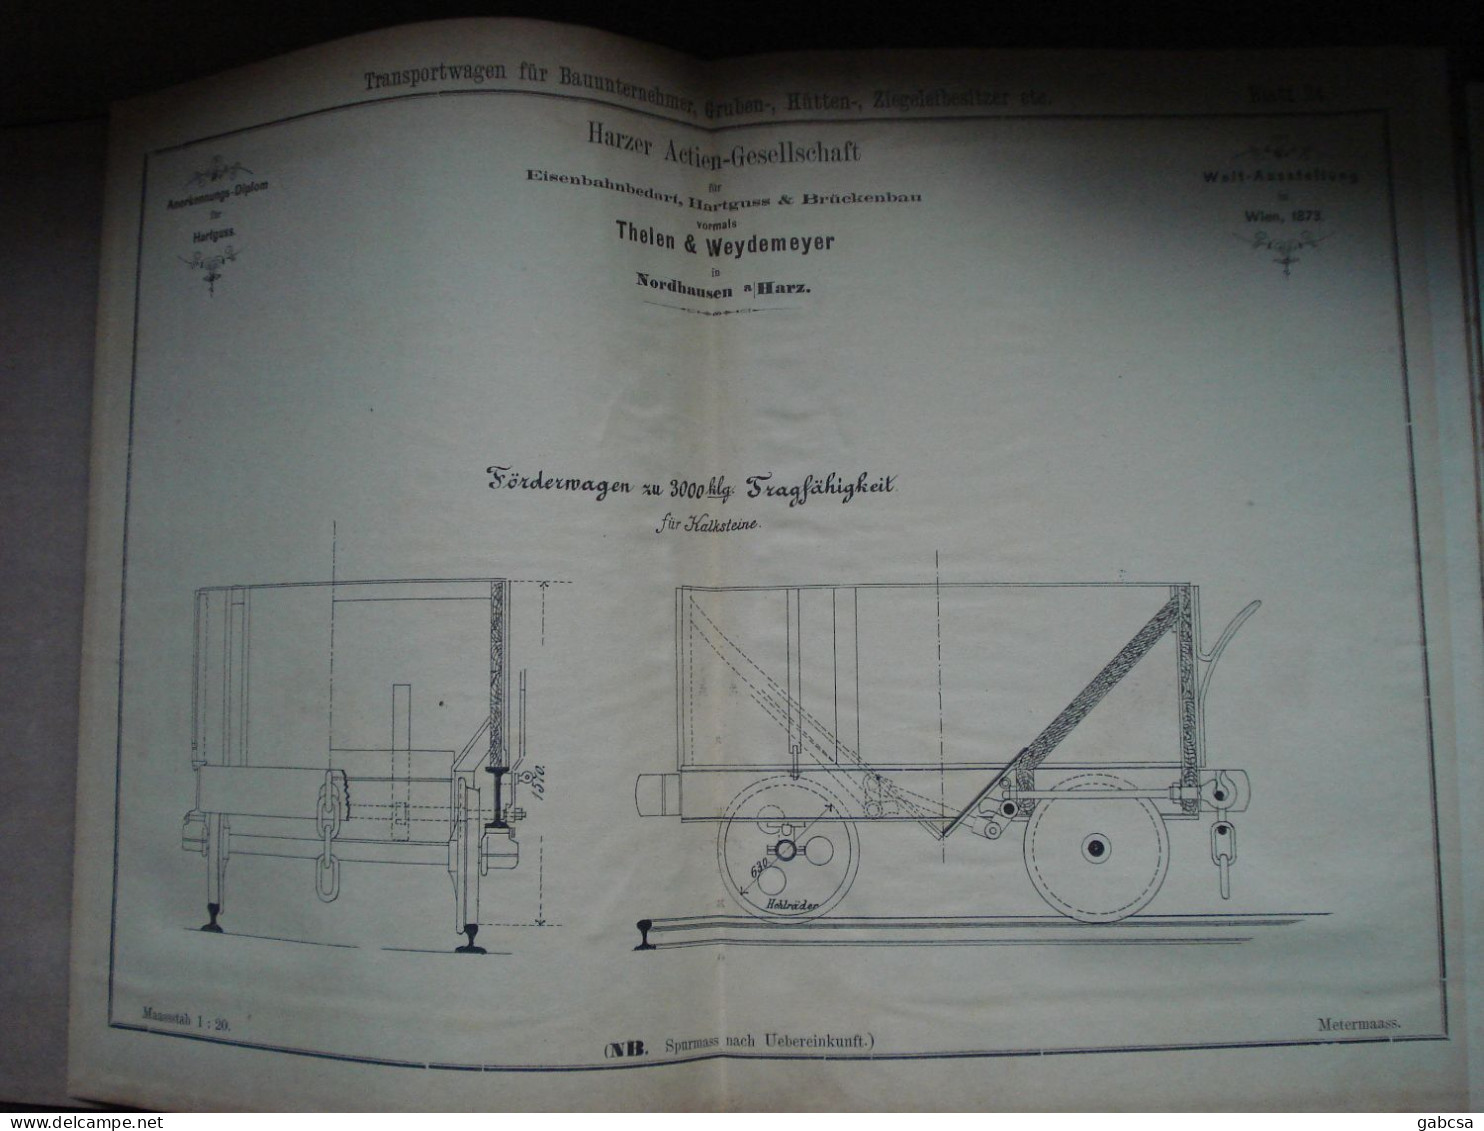 Rollwagen Plans 1872-73 Handmade "Kolos" And 18 Harzer Aktiengesellschaft Plan Printed In Book - Supplies And Equipment